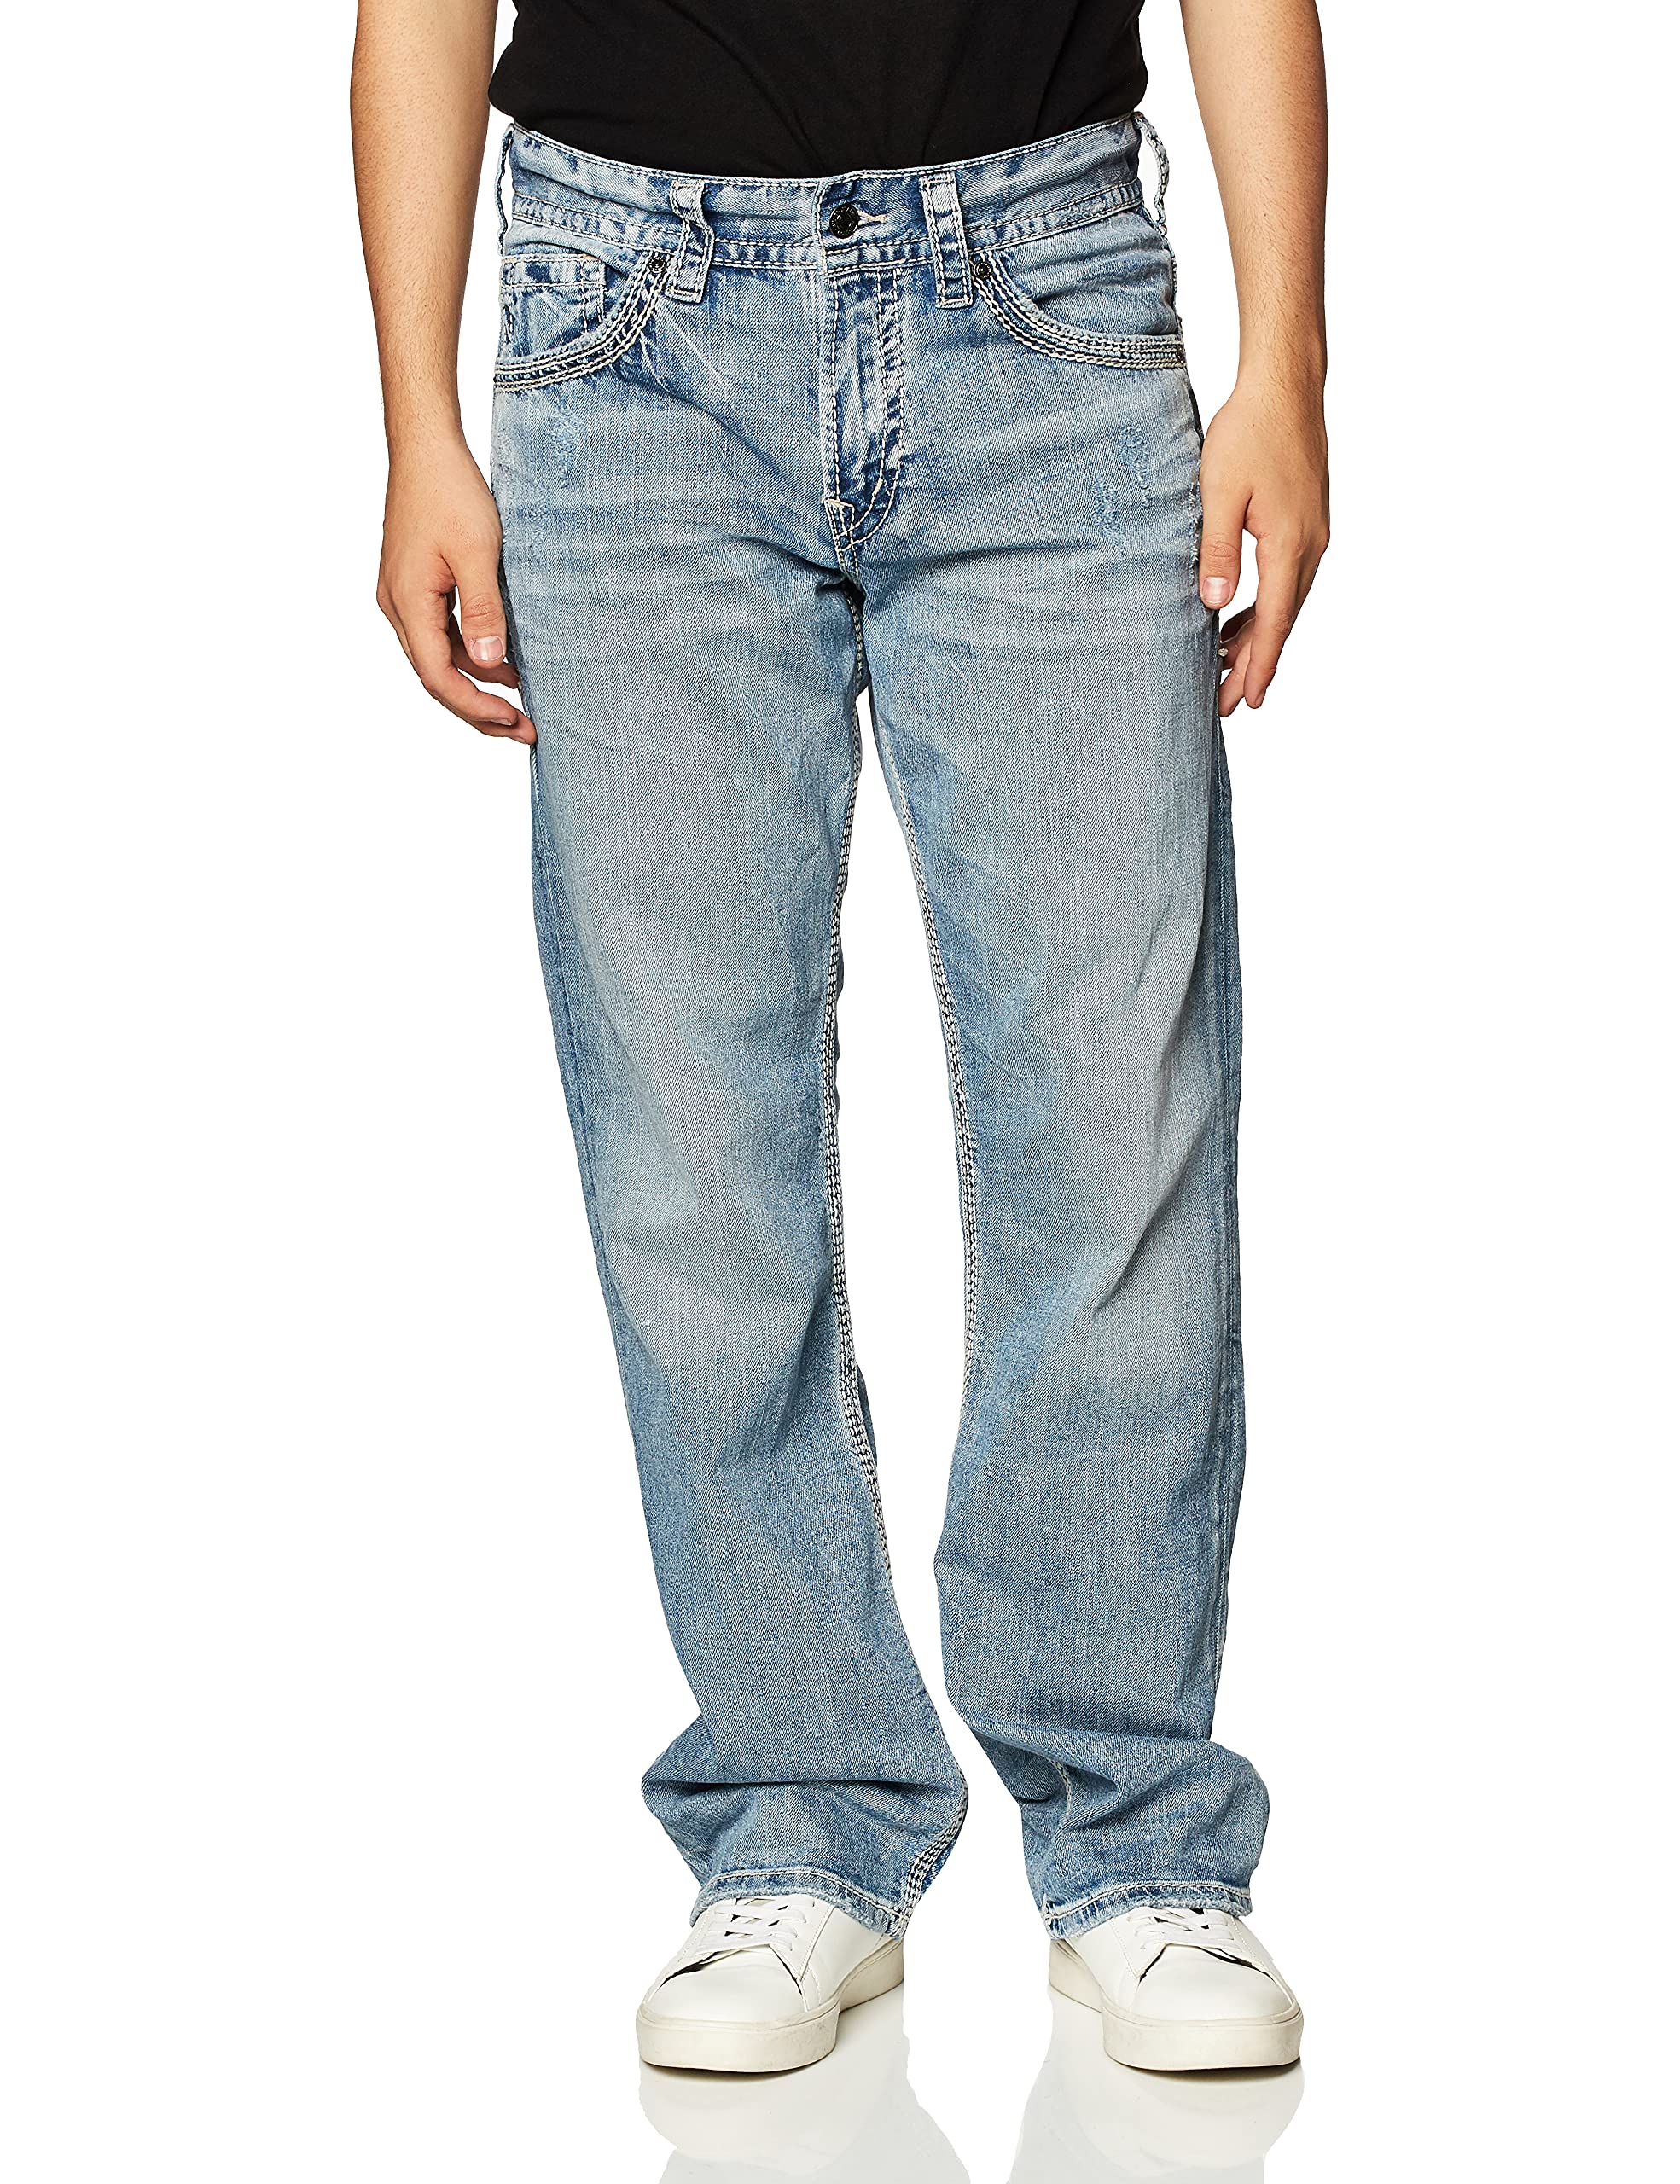 Silver Jeans co Mens gordie Loose Fit Straight Leg Jeans, Light Indigo, 33W x 30L